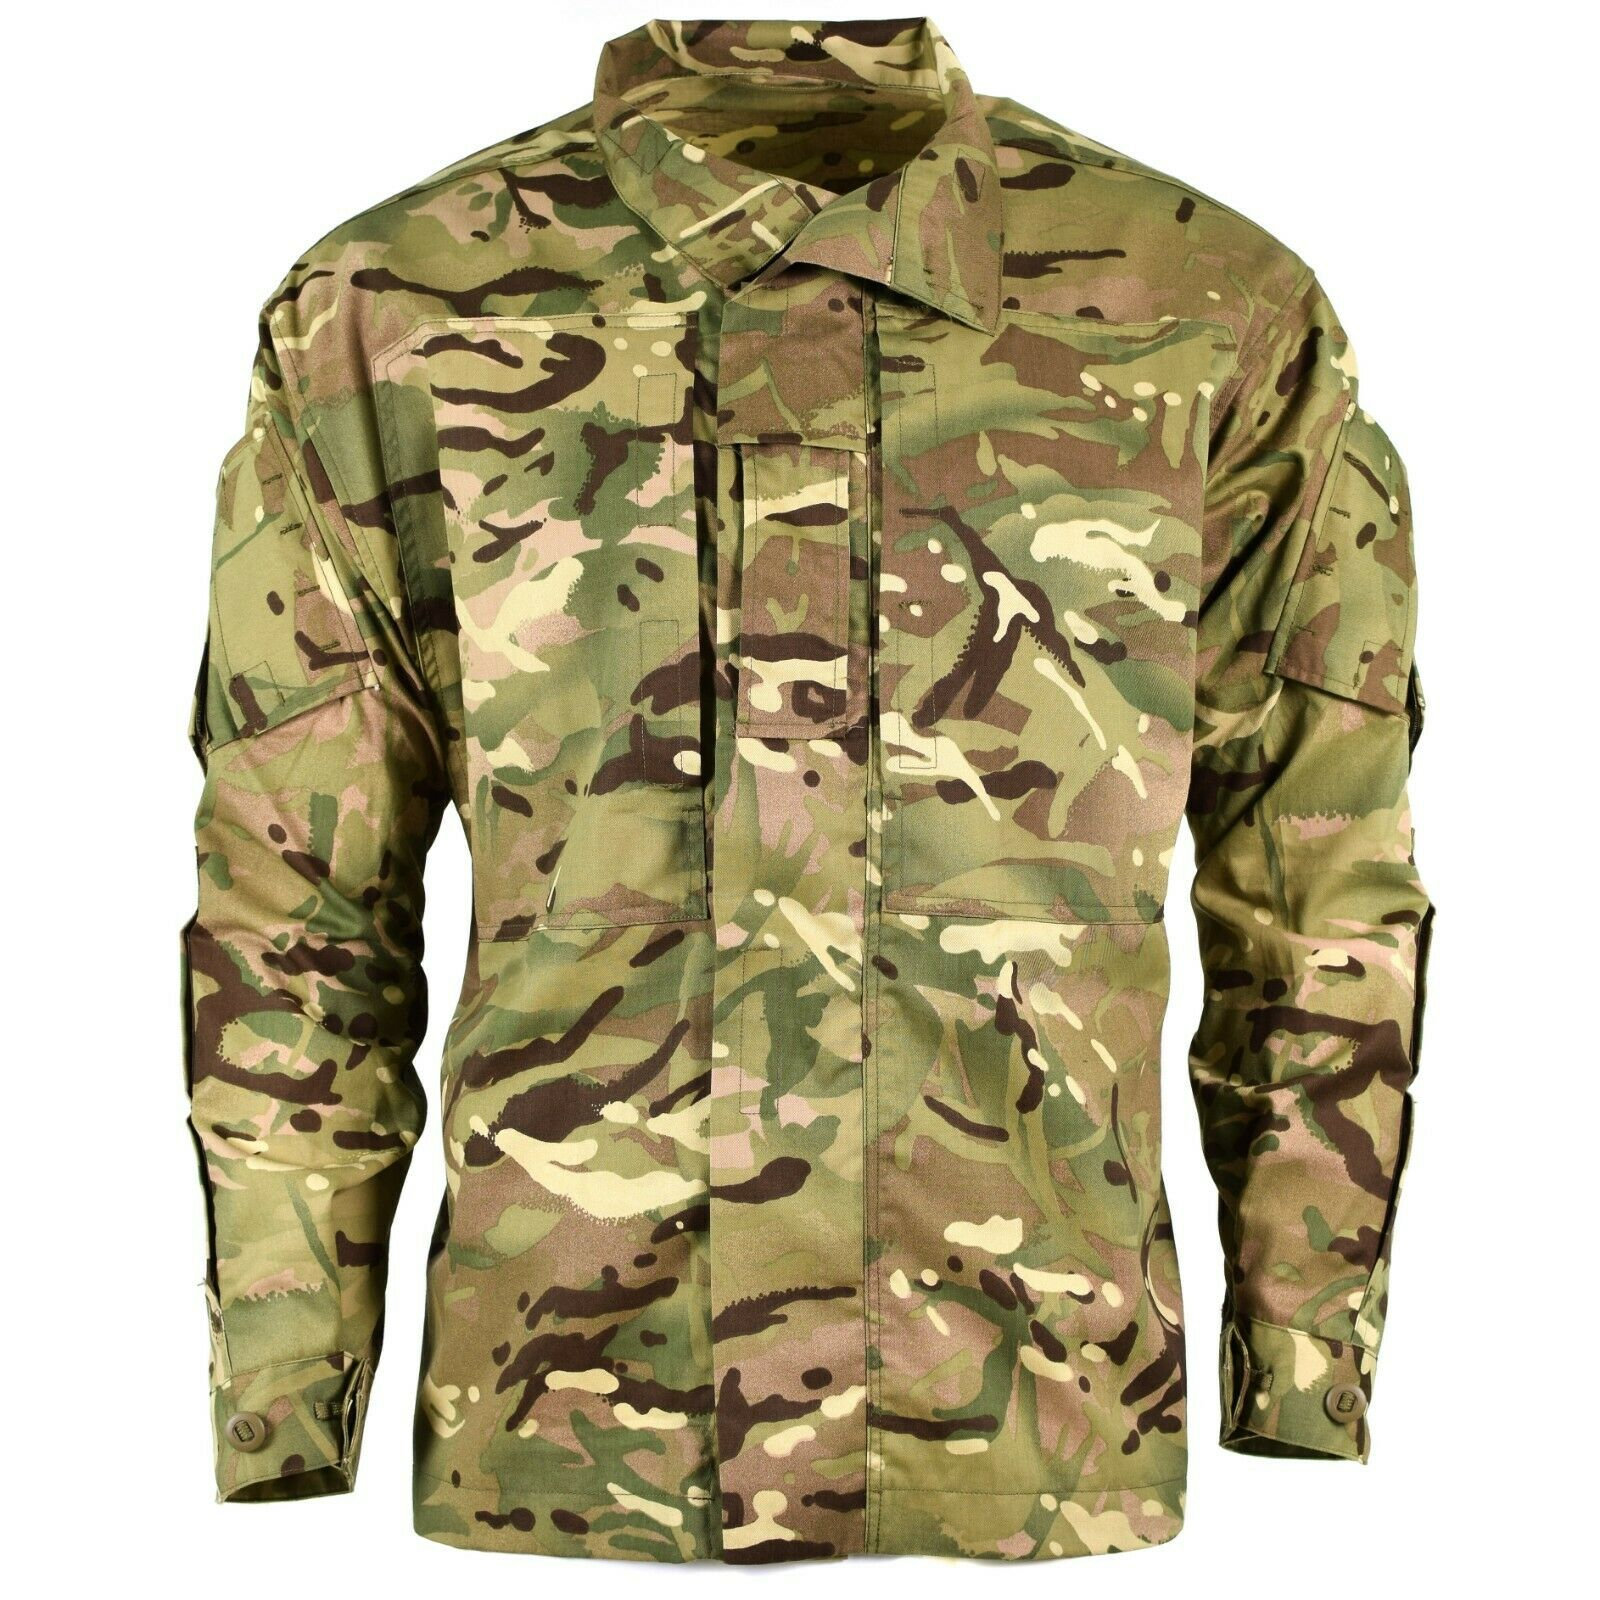 Genuine British army jacket combat MTP camo field shirt | Etsy